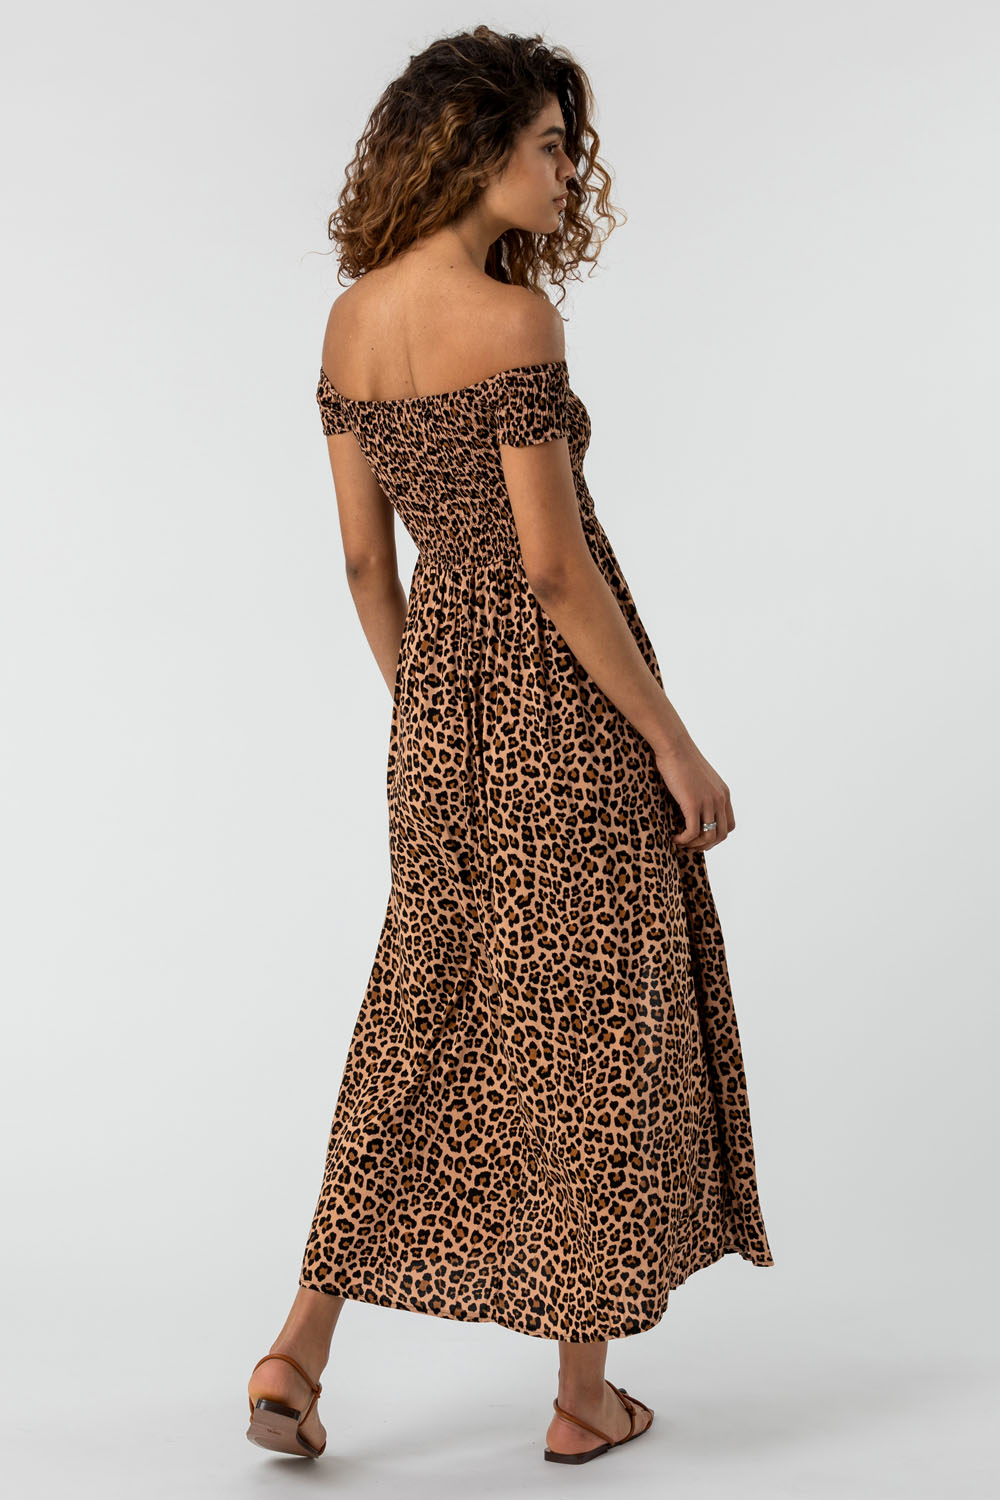 Brown Shirred Leopard Print Bardot Dress, Image 2 of 5